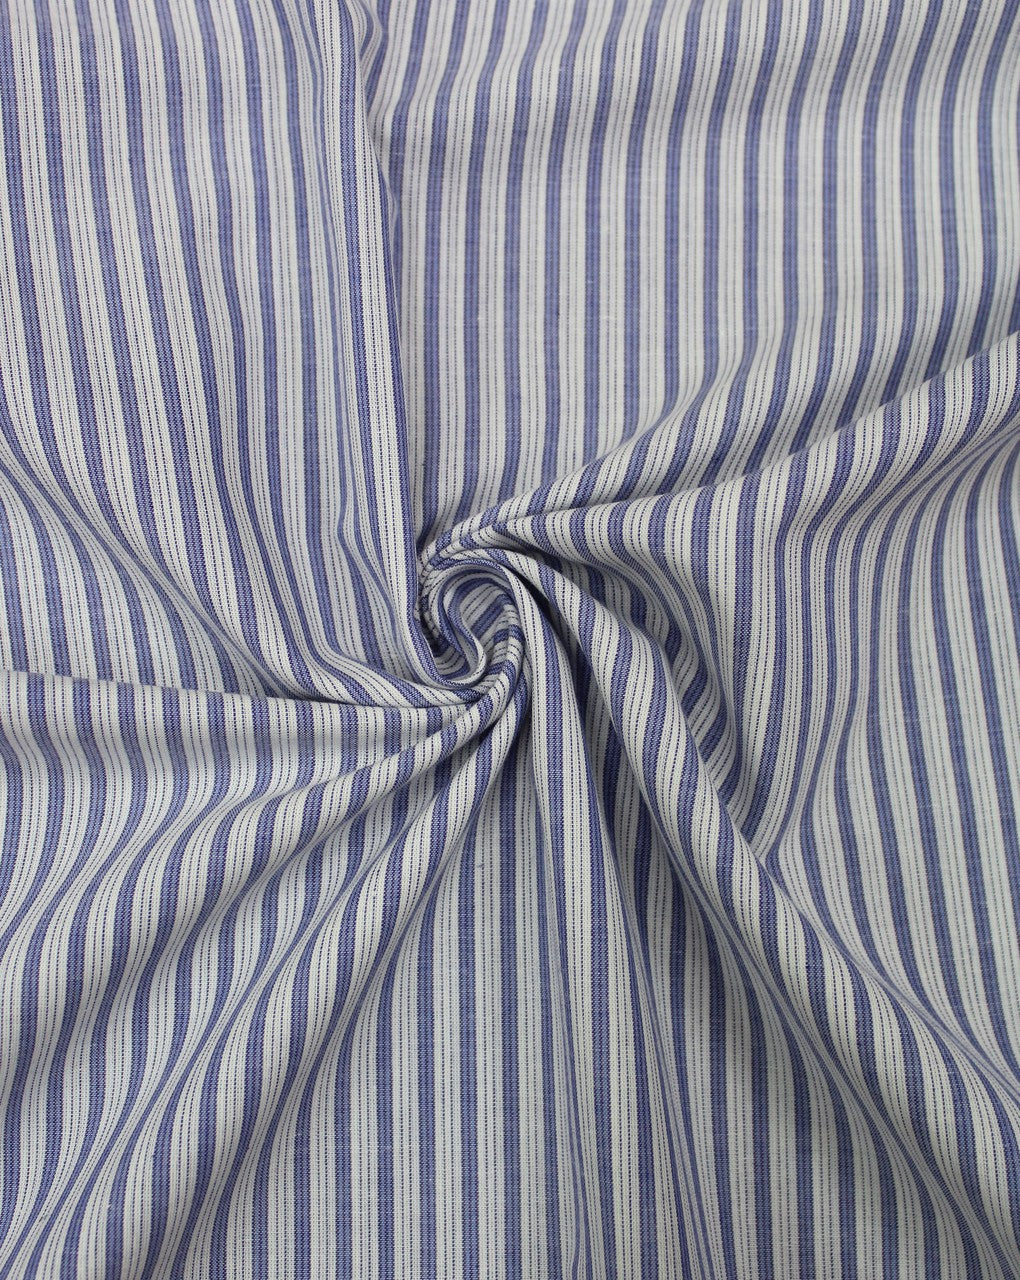 Cream And Blue Stripe Design Cotton Yarn Dyed Fabric